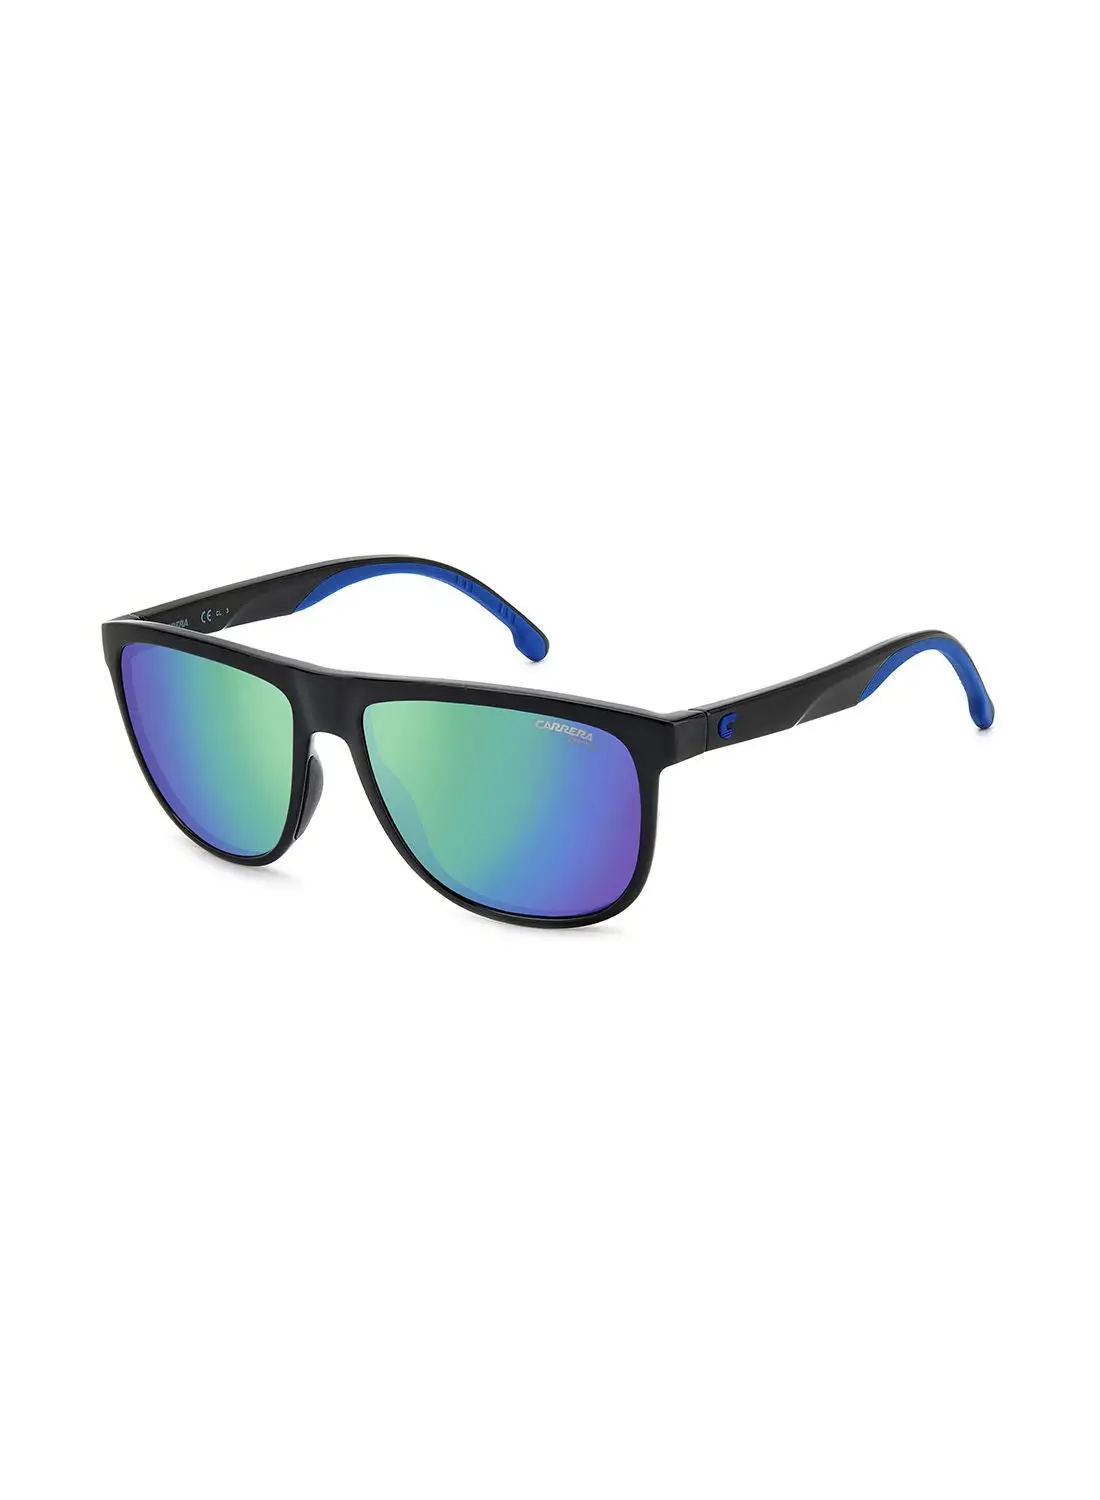 Carrera Men's UV Protection Sunglasses - Carrera 8059/S Black/Blue 58 - Lens Size: 58 Mm